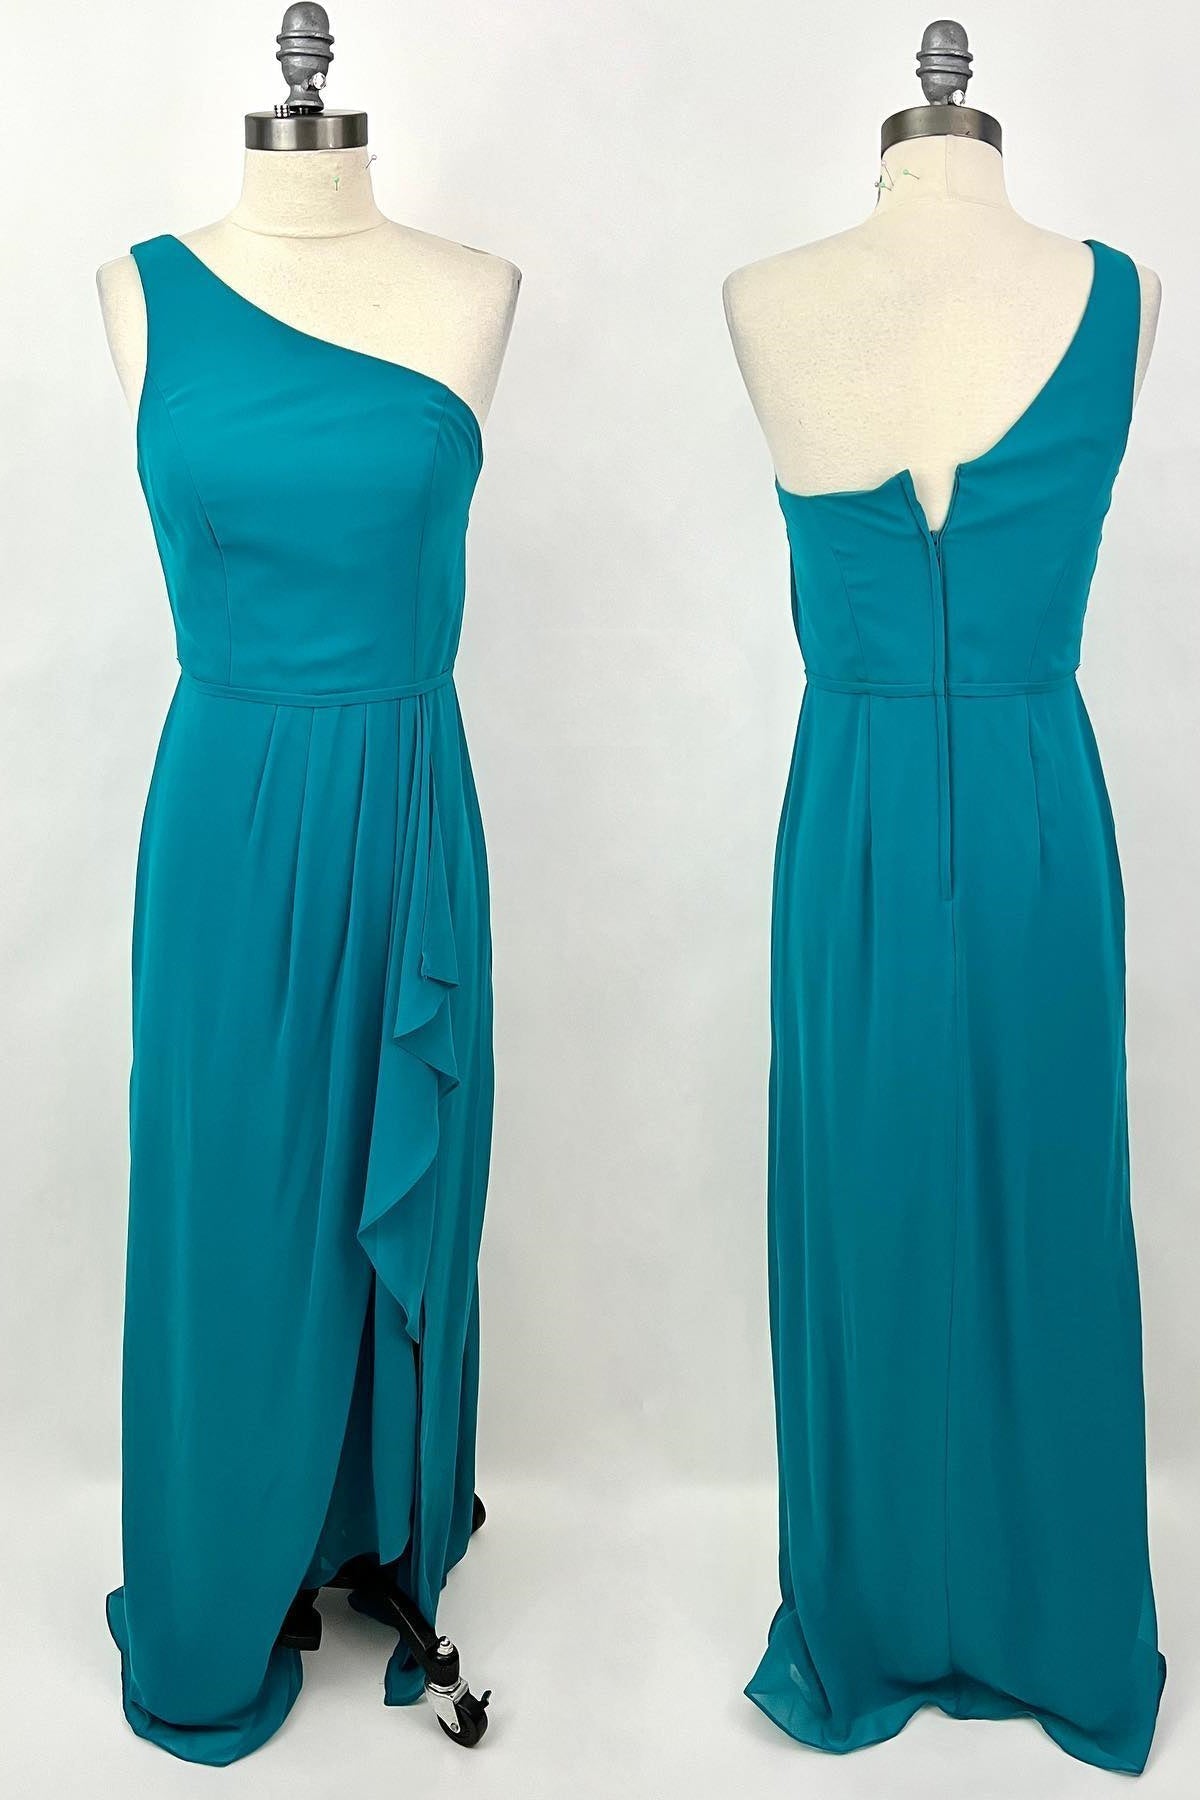 One Shoulder Turquoise Ruffles Chiffon Long Bridesmaid Dress